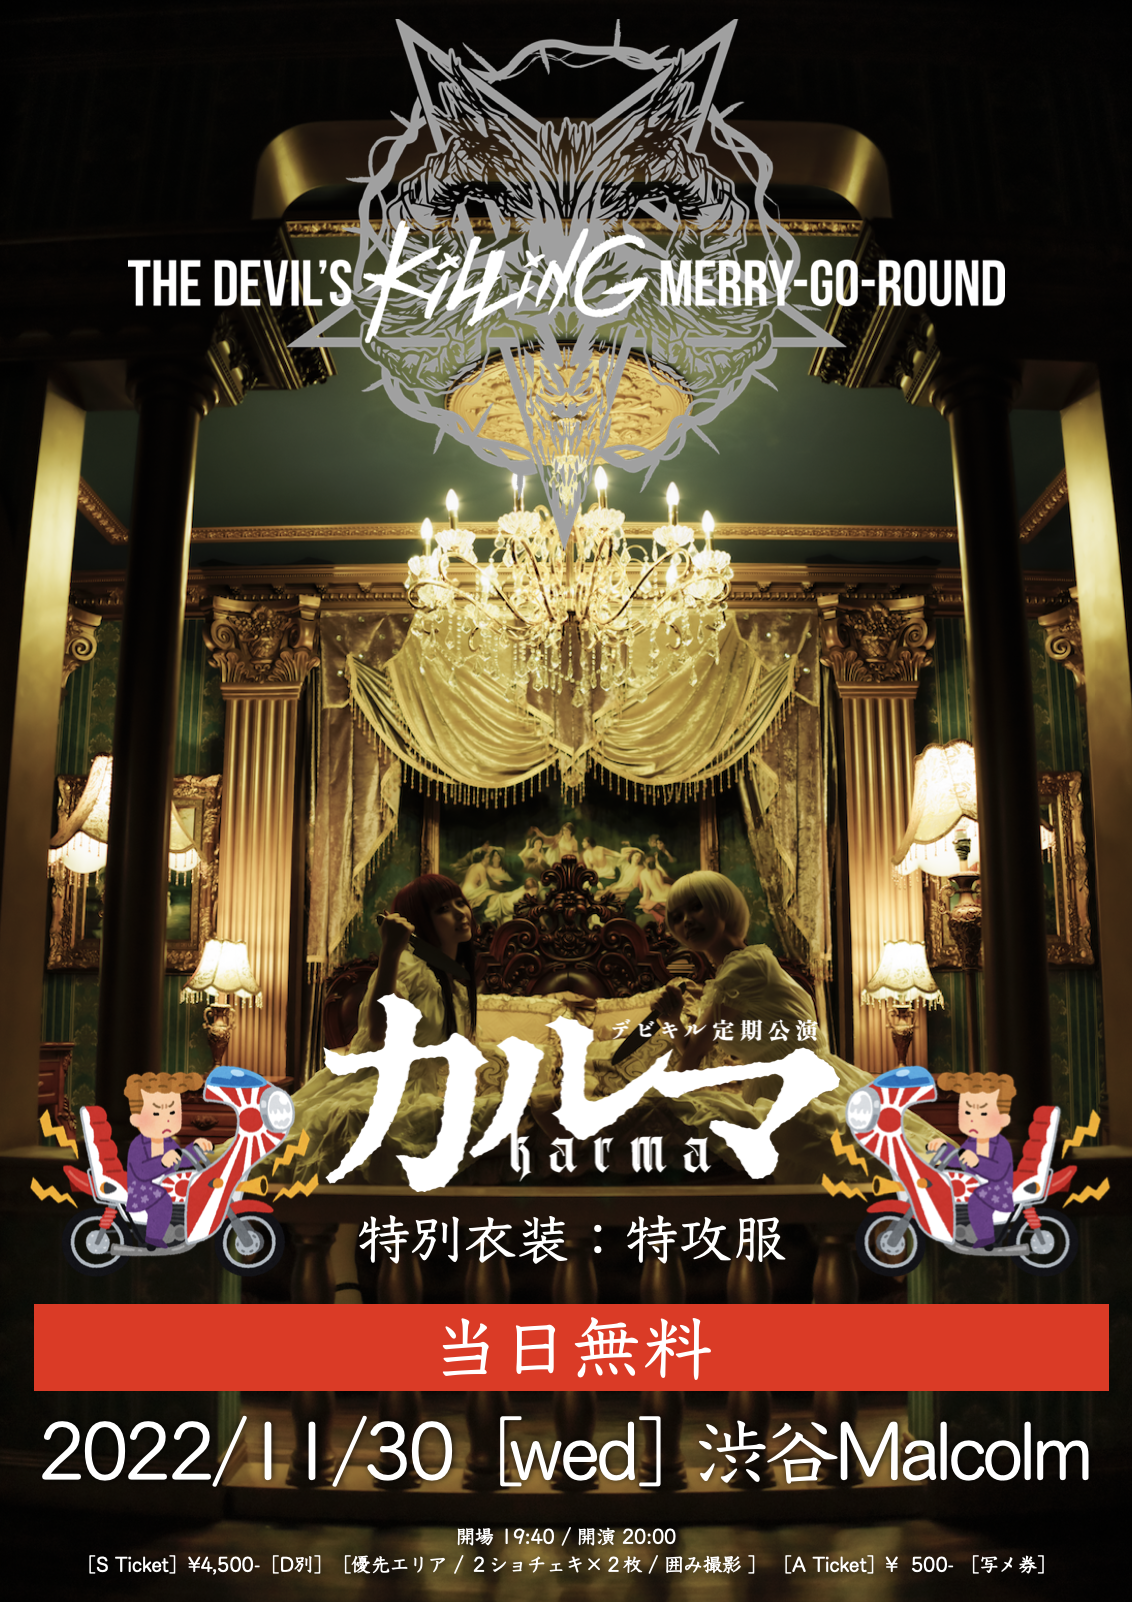 THE DEVIL’S KILLING MERRY-GO-ROUND定期公演 『カルマ- karma-7』